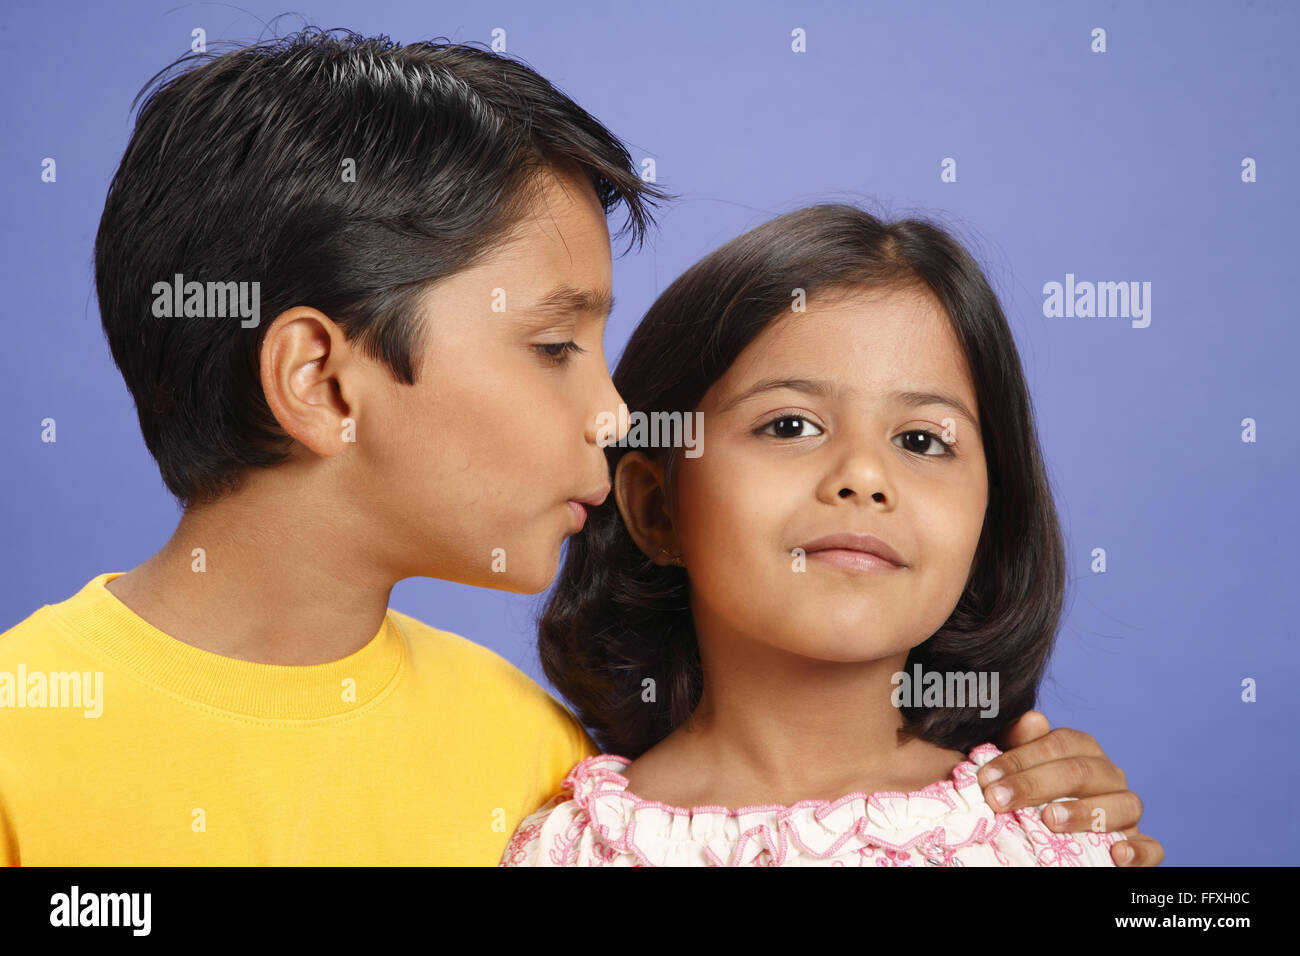 Ten year old boy kissing eight year old girl's cheek MR#703U,703V Stock Photo